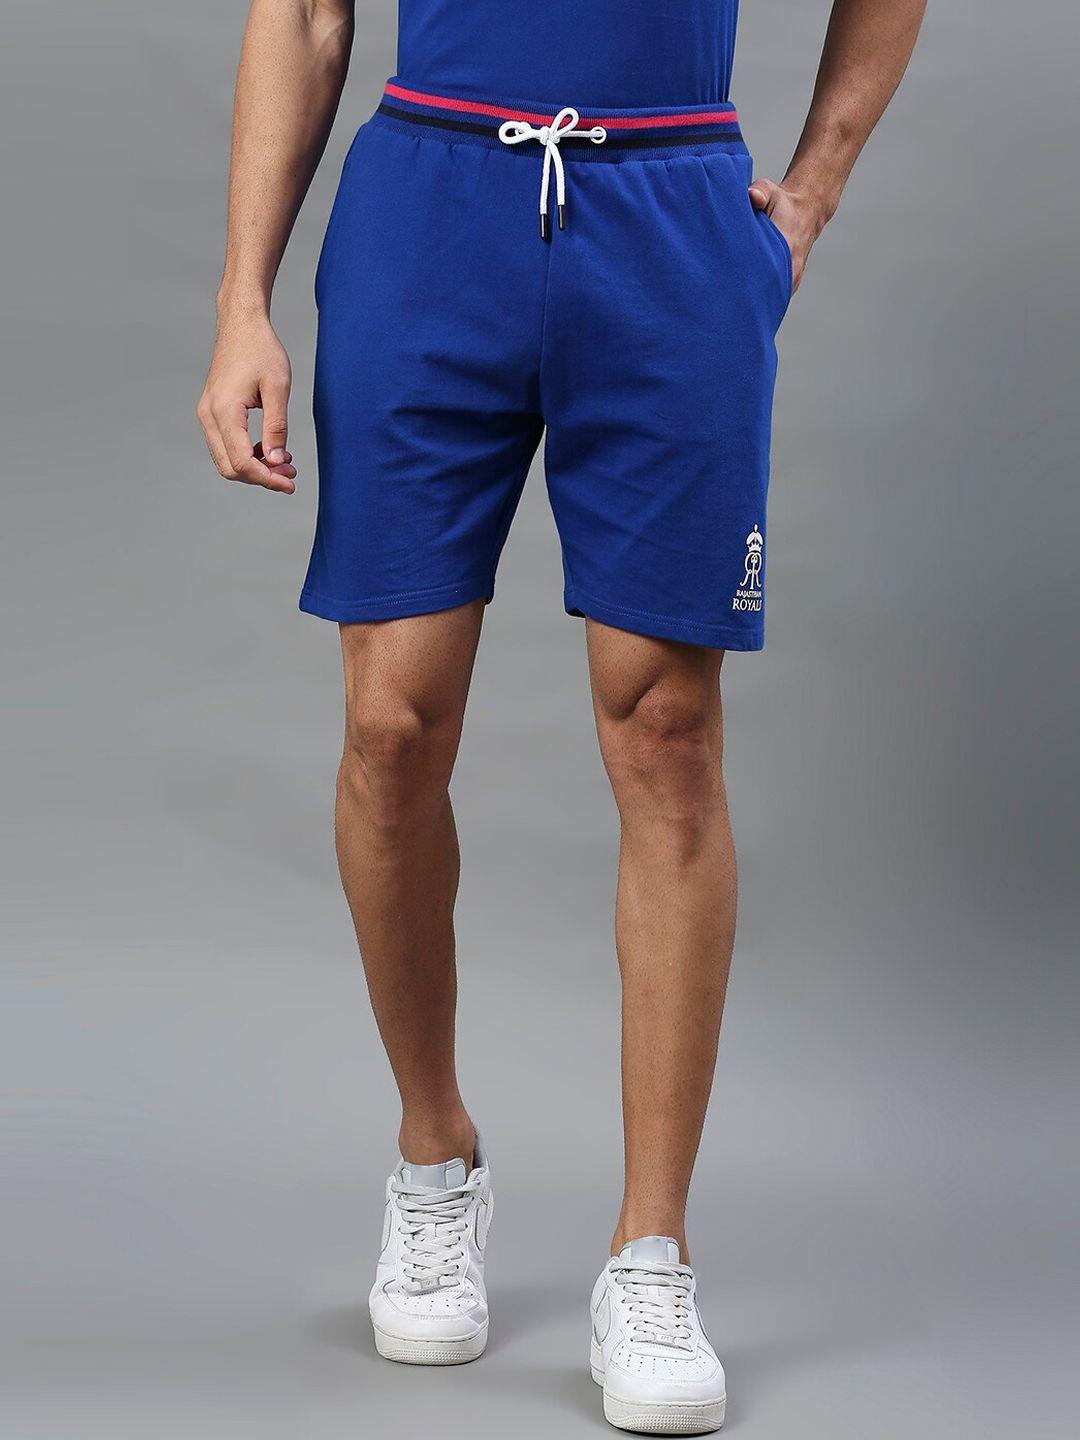 fancode-men-mid-rise-rajasthan-royals-logo-printed-sports-shorts